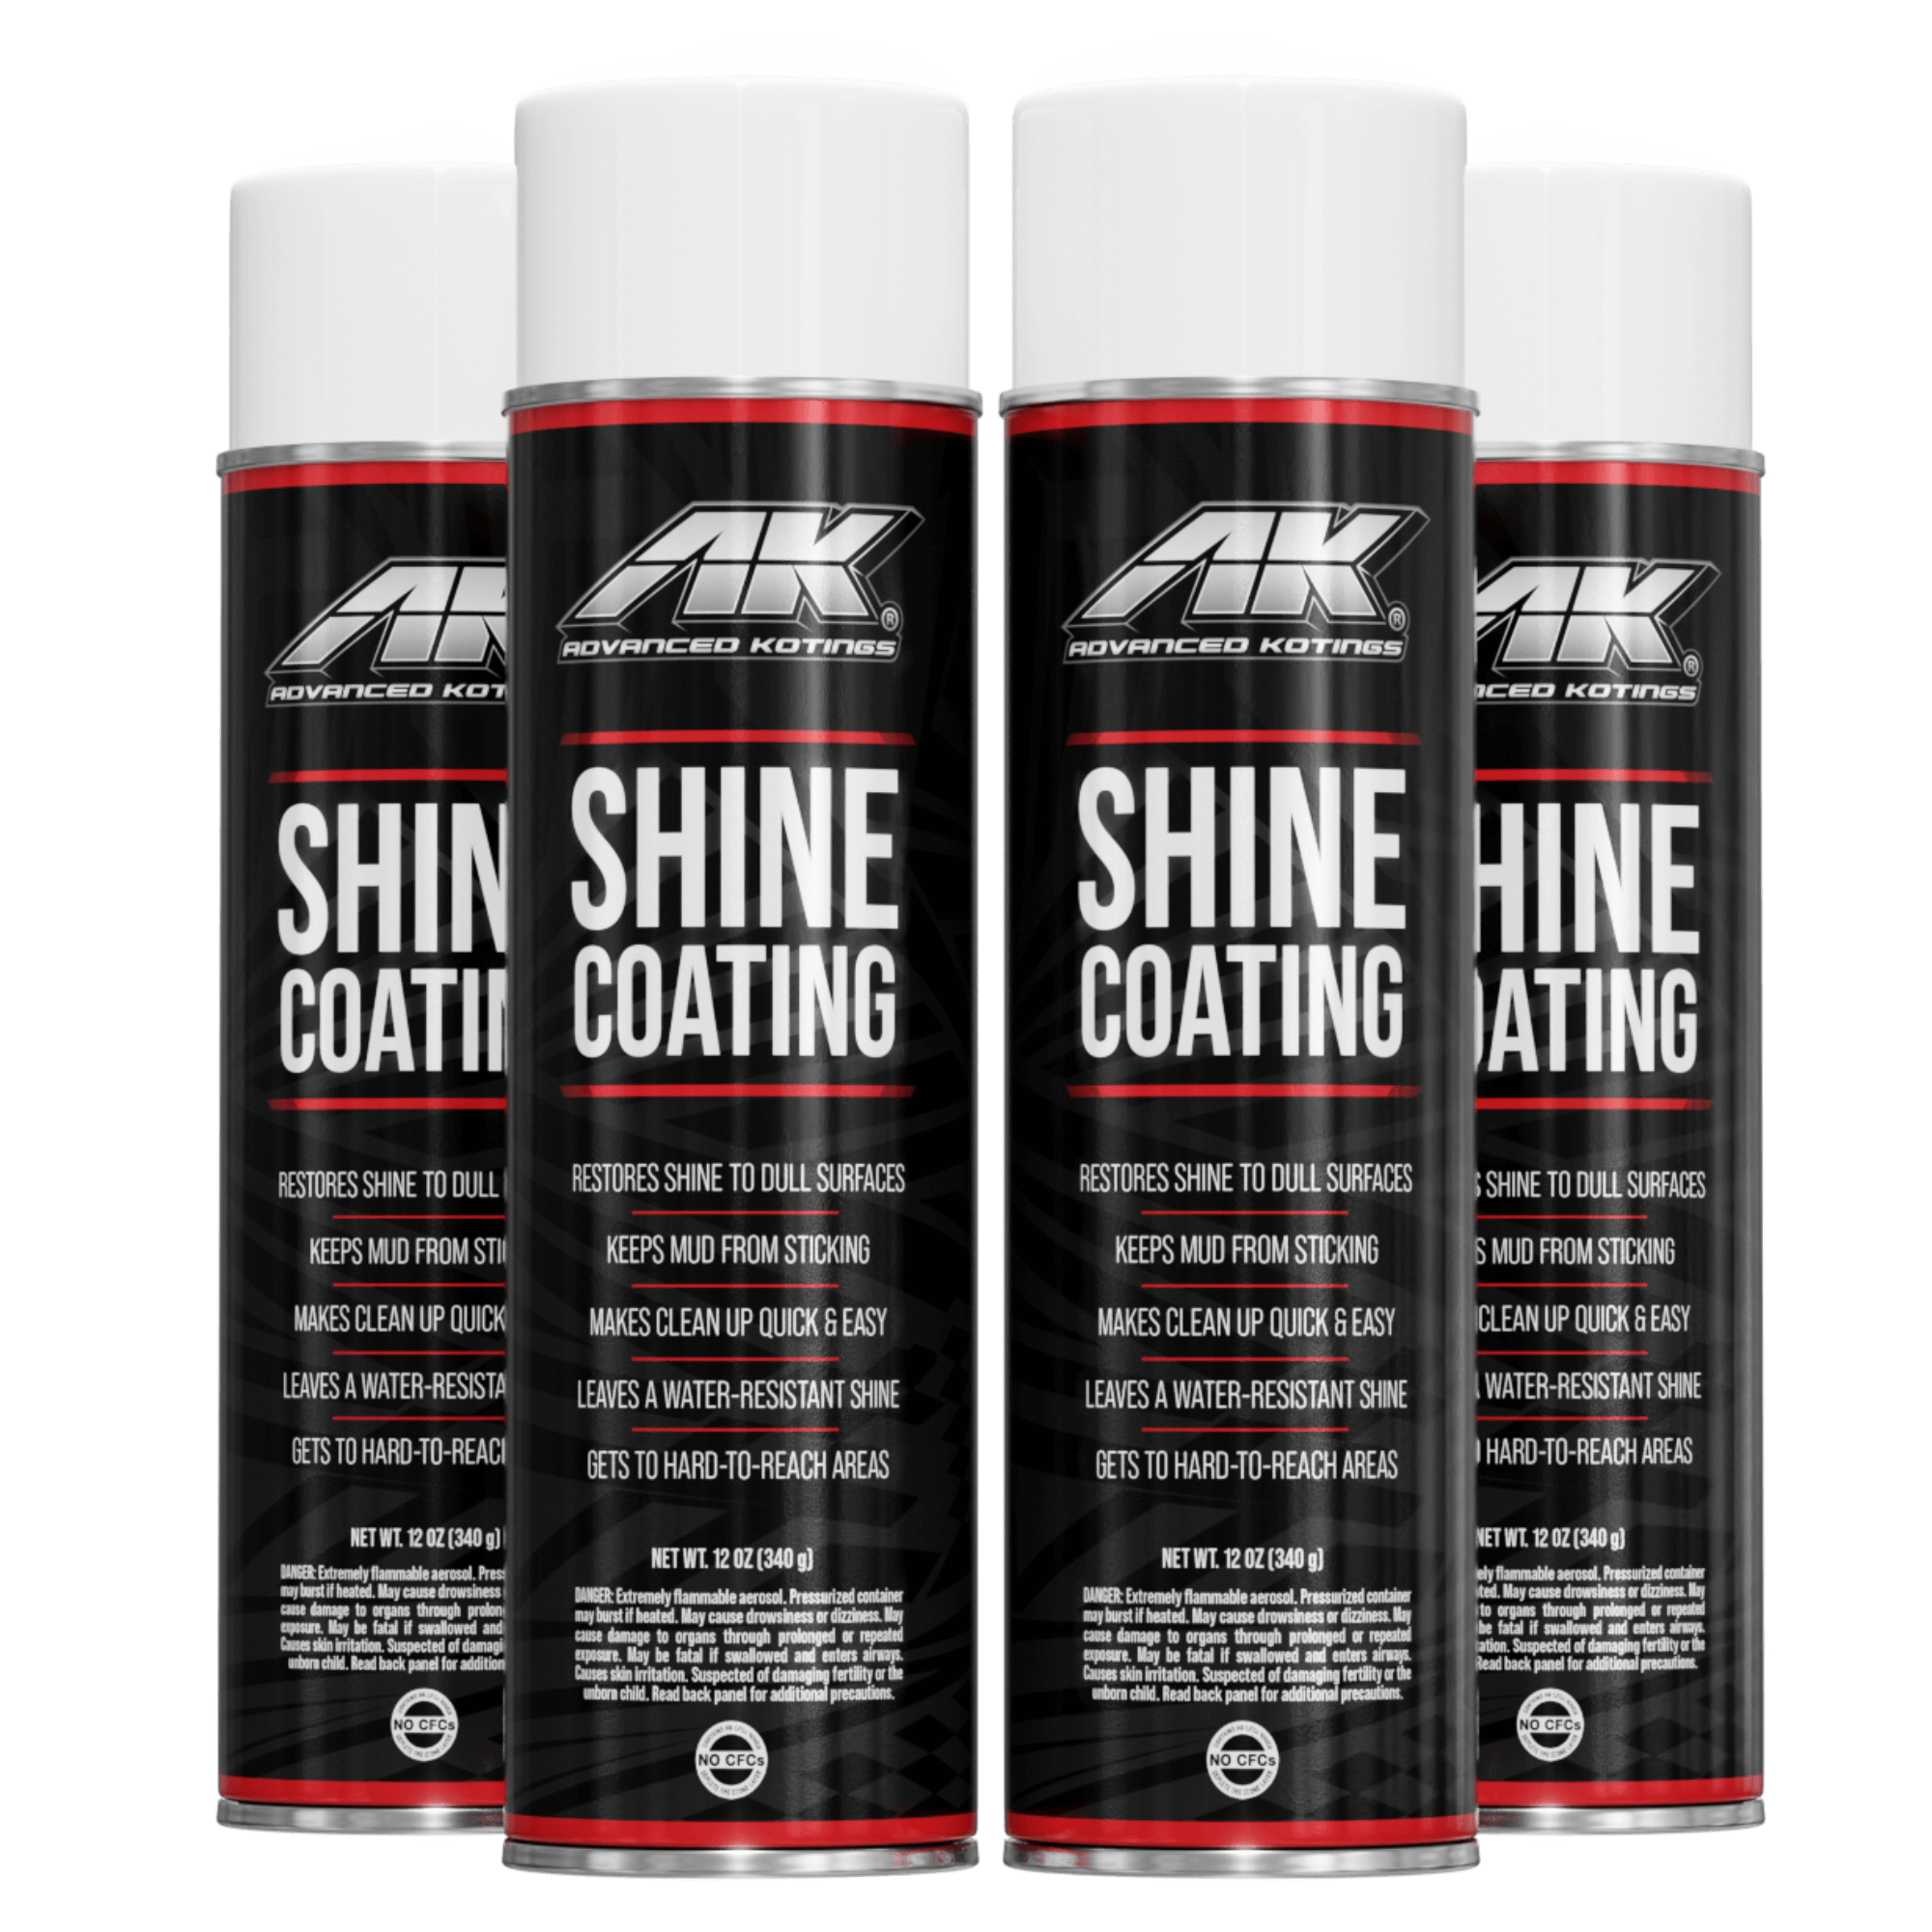 Shine Coating Deluxe Off-road Wash Kit - Advanced Kotings